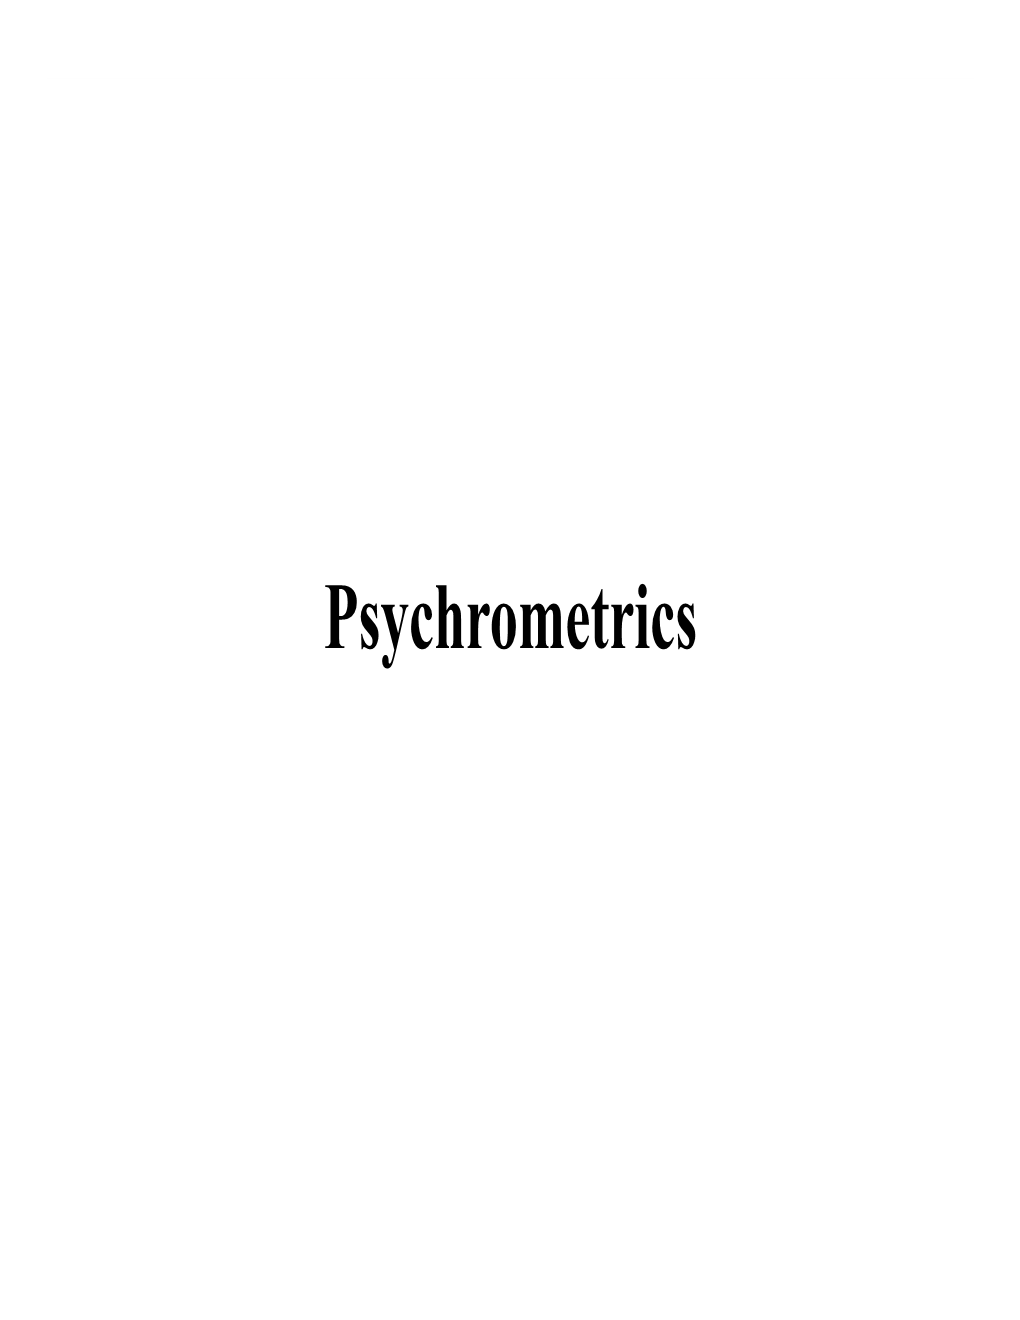 Psychrometrics Outline